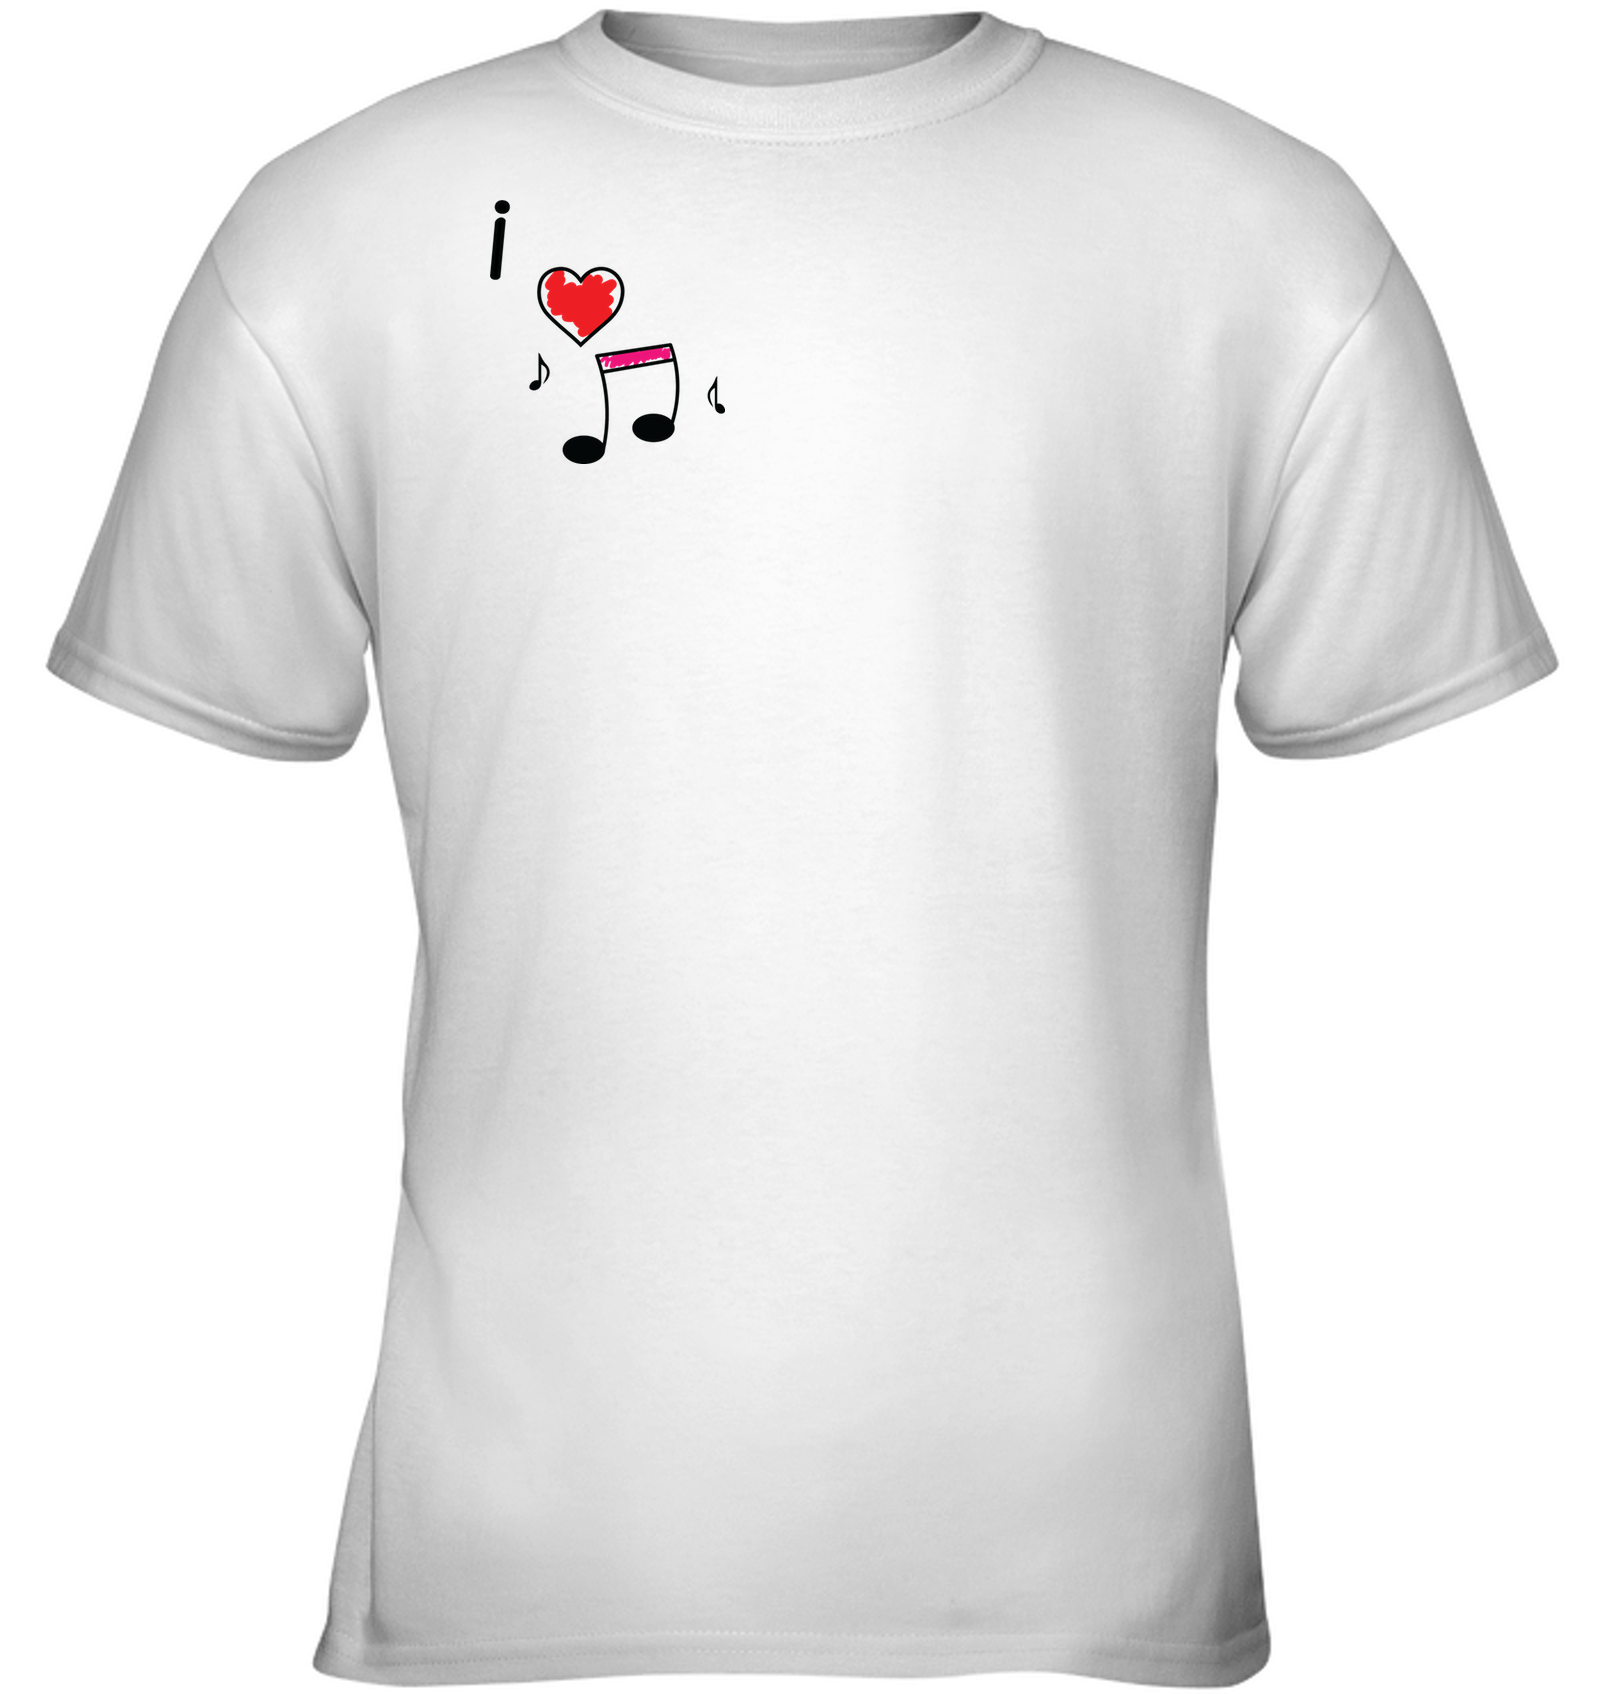 I Love Music Hearts and Fun (Pocket Size) - Gildan Youth Short Sleeve T-Shirt